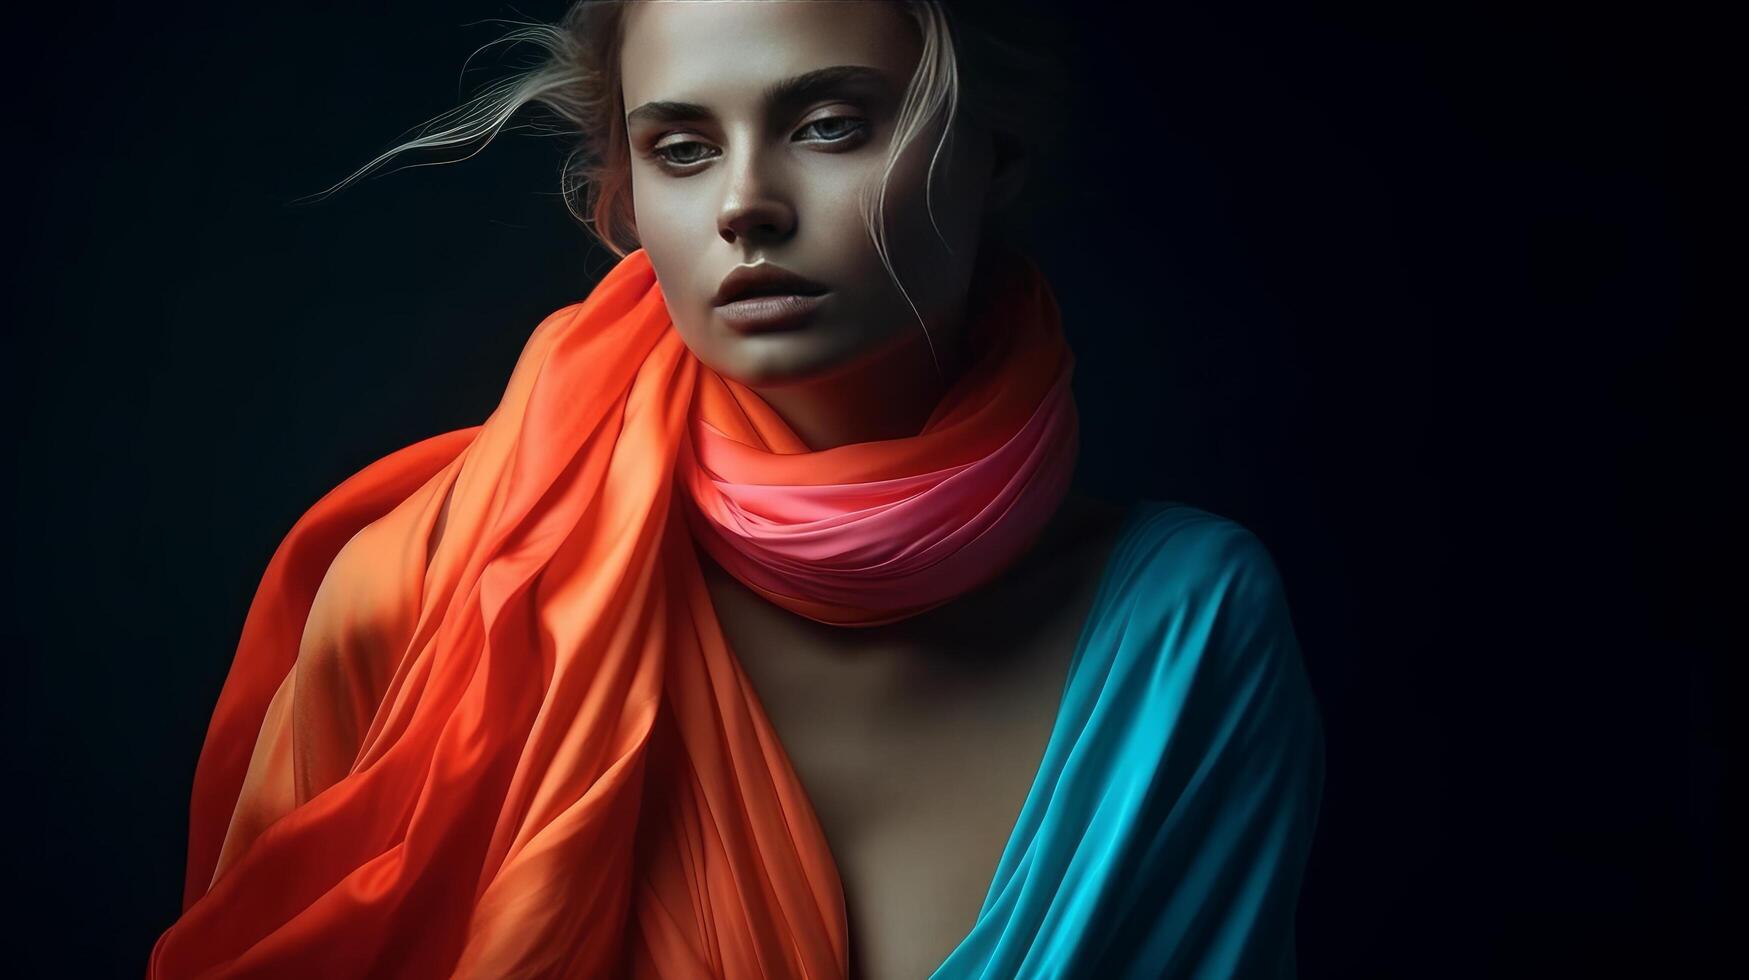 A stylish girl editorial style photo vibrant elastic